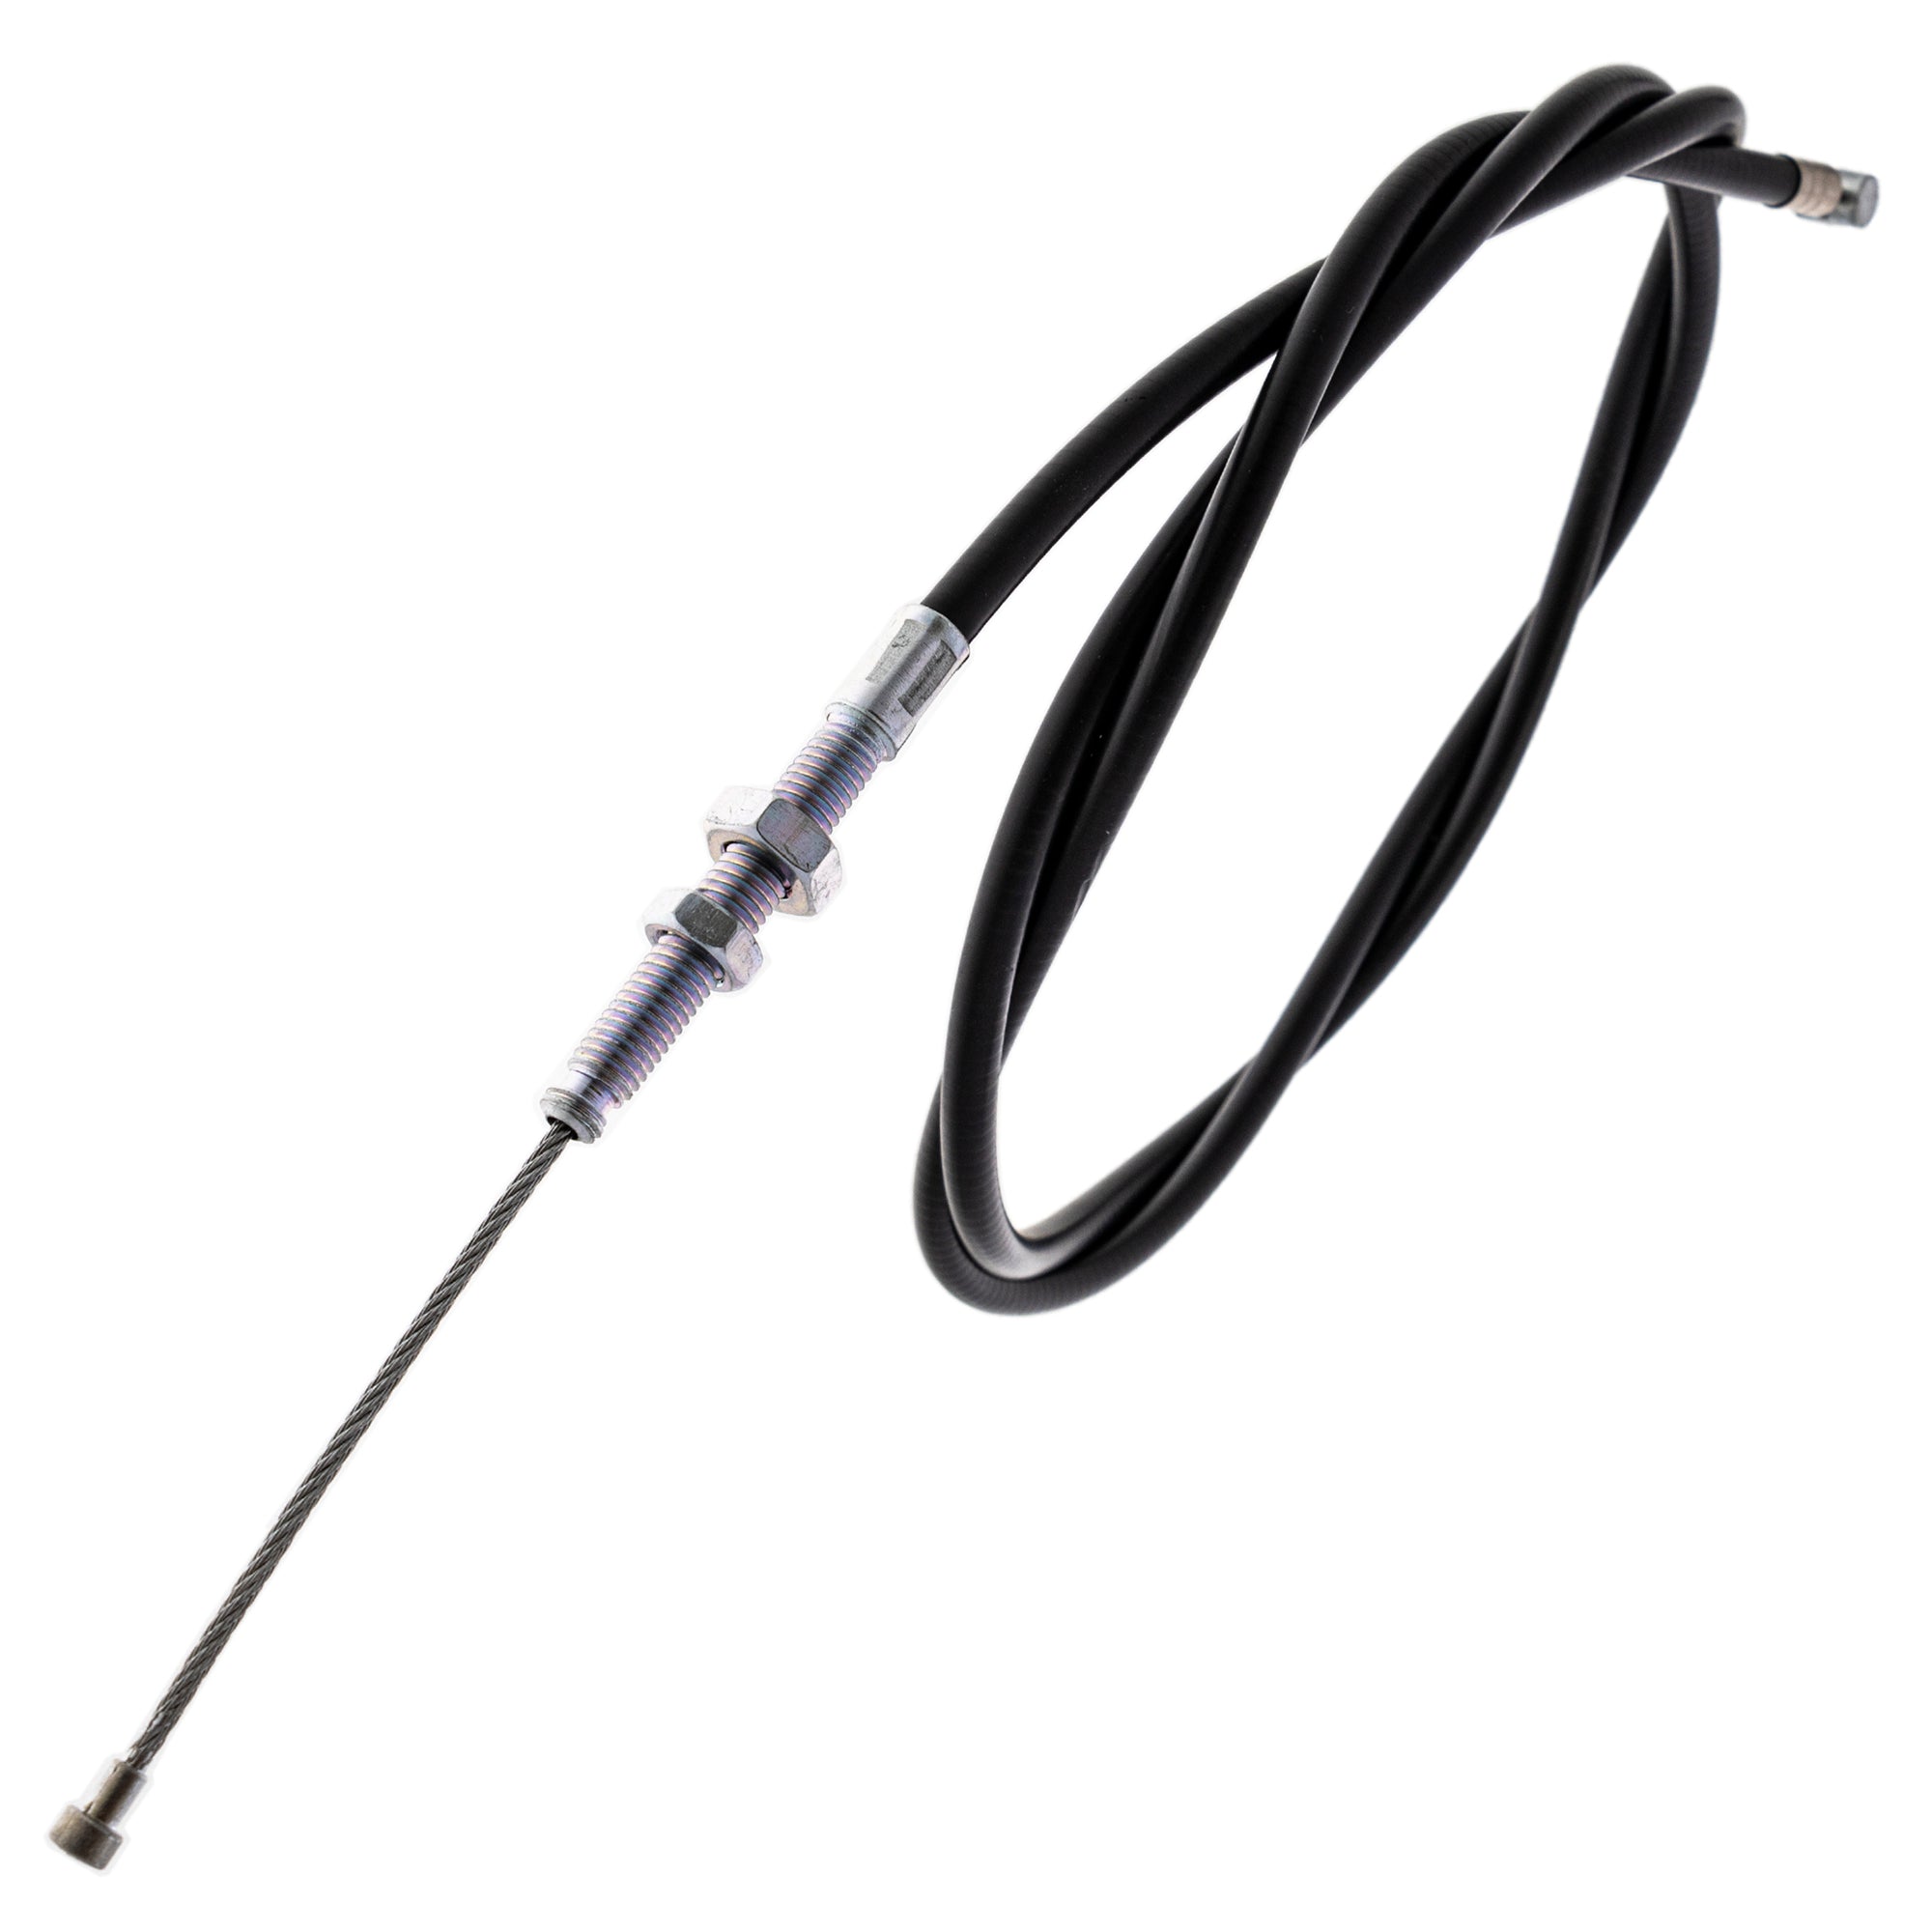 Clutch Cable for Honda Shadow Aero Spirit ACE 1100 22870-MBH-000